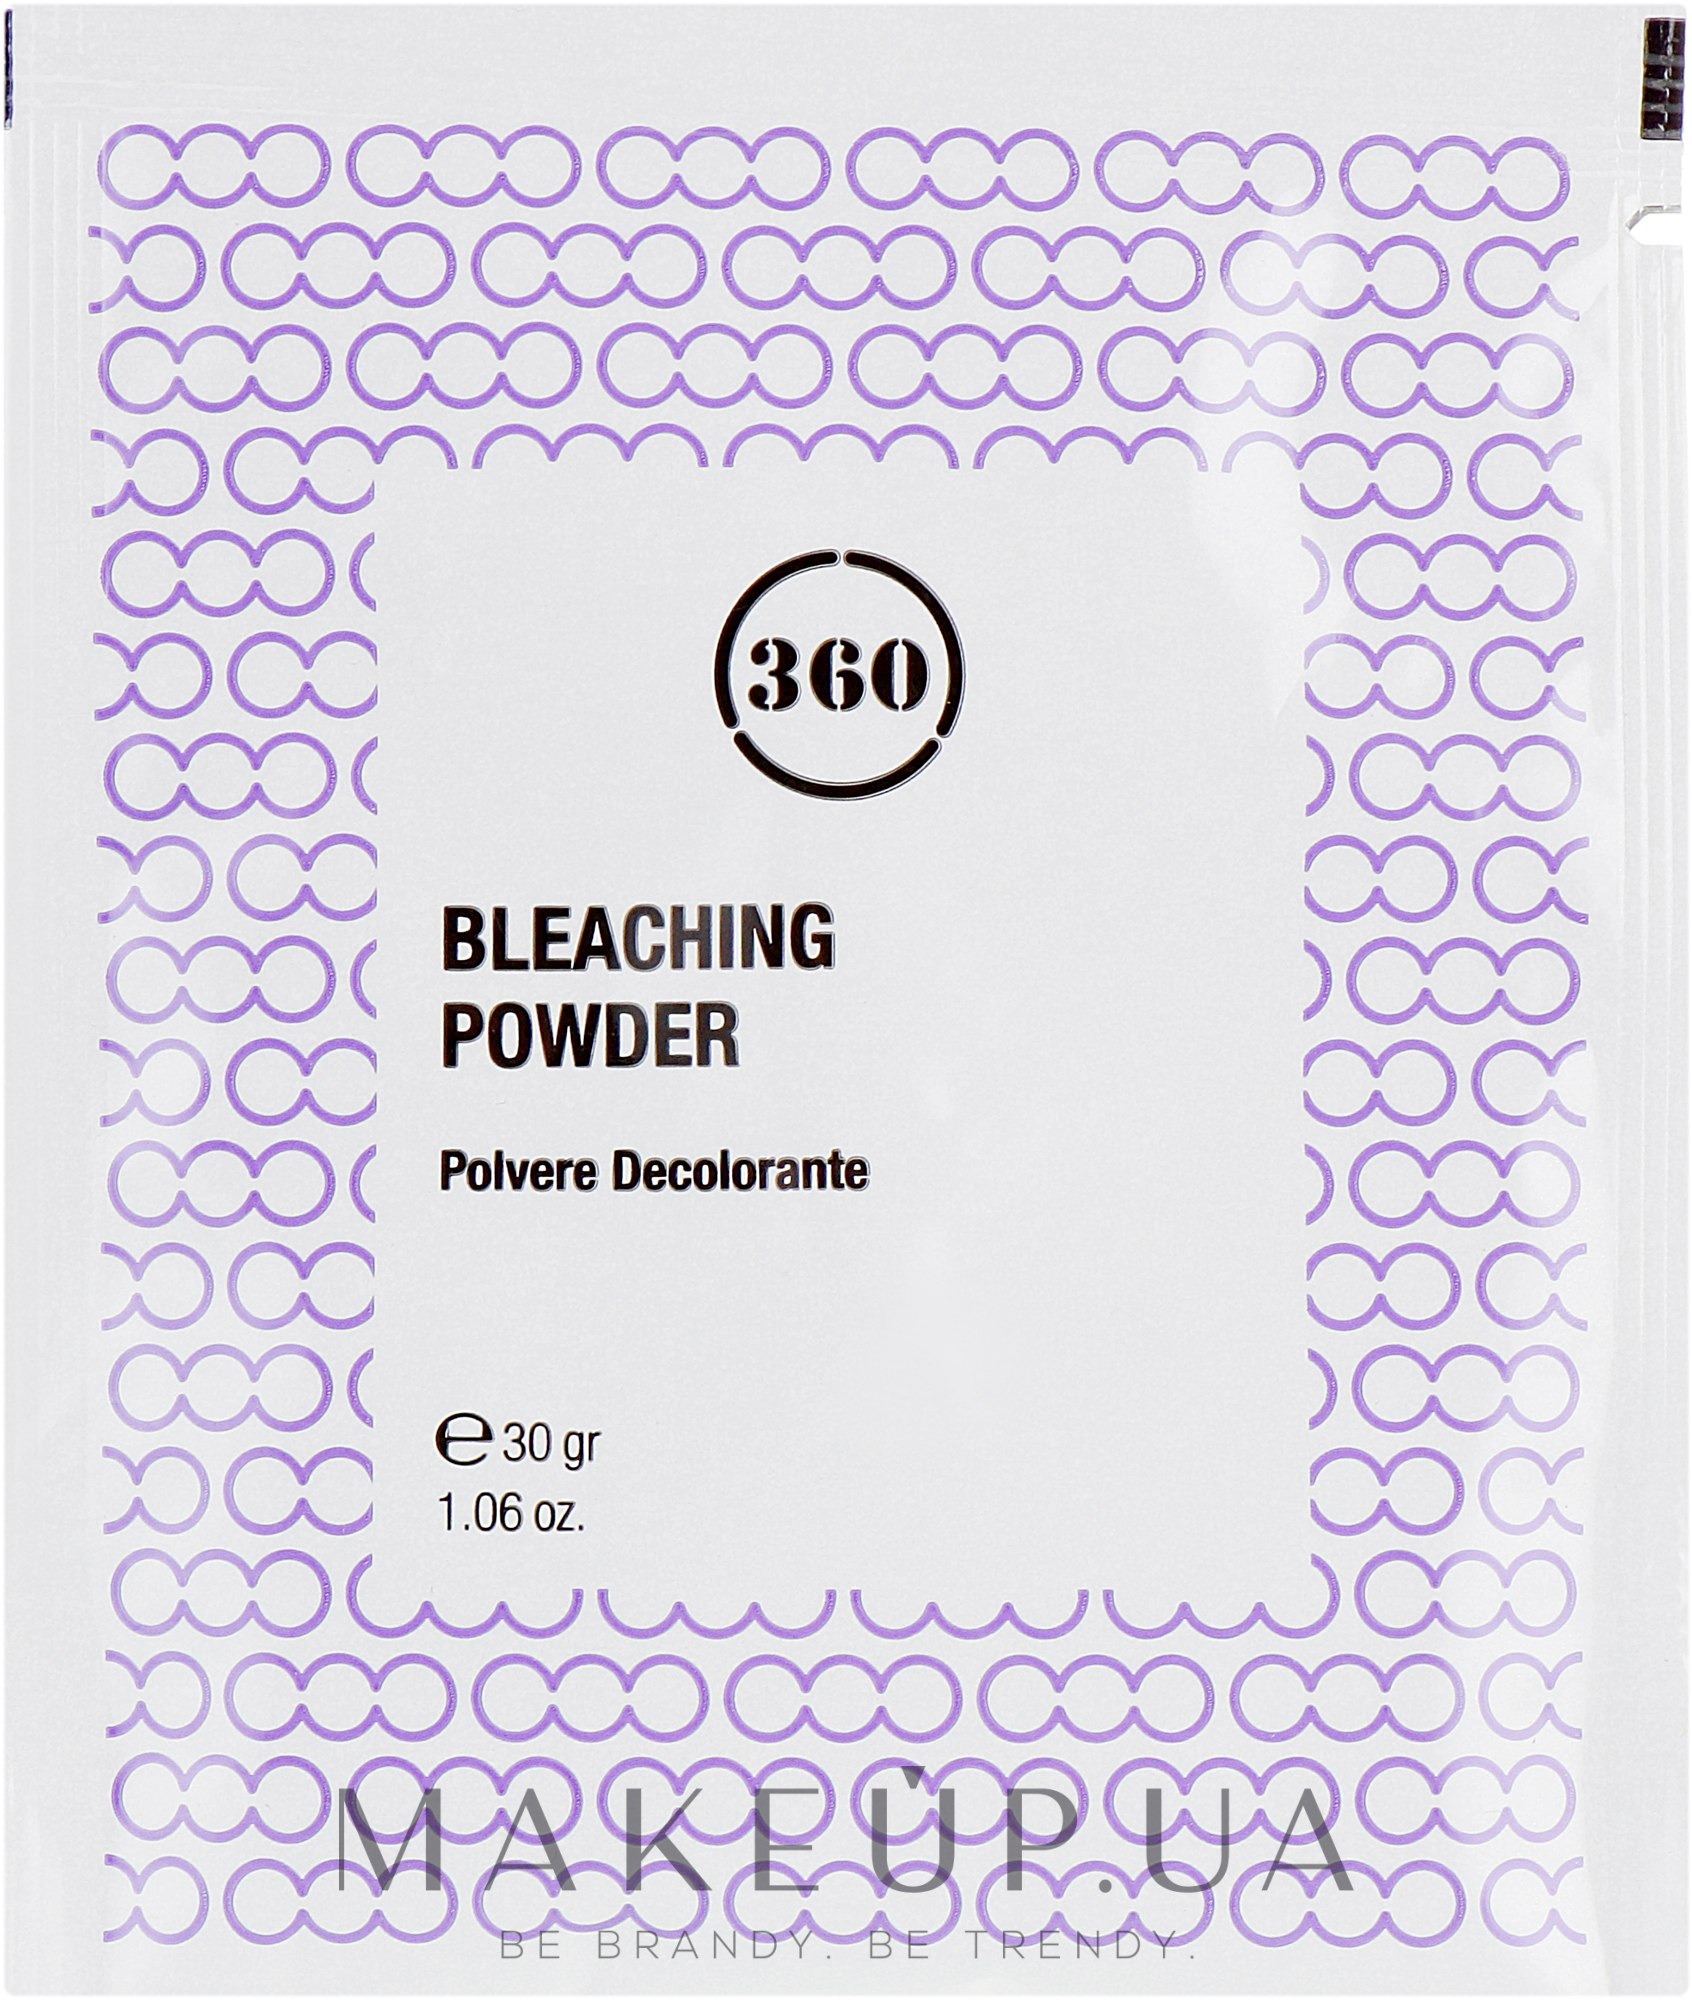 Осветляющая пудра антижелтая для волос - 360 Bleaching Powder (мини) — фото 30g